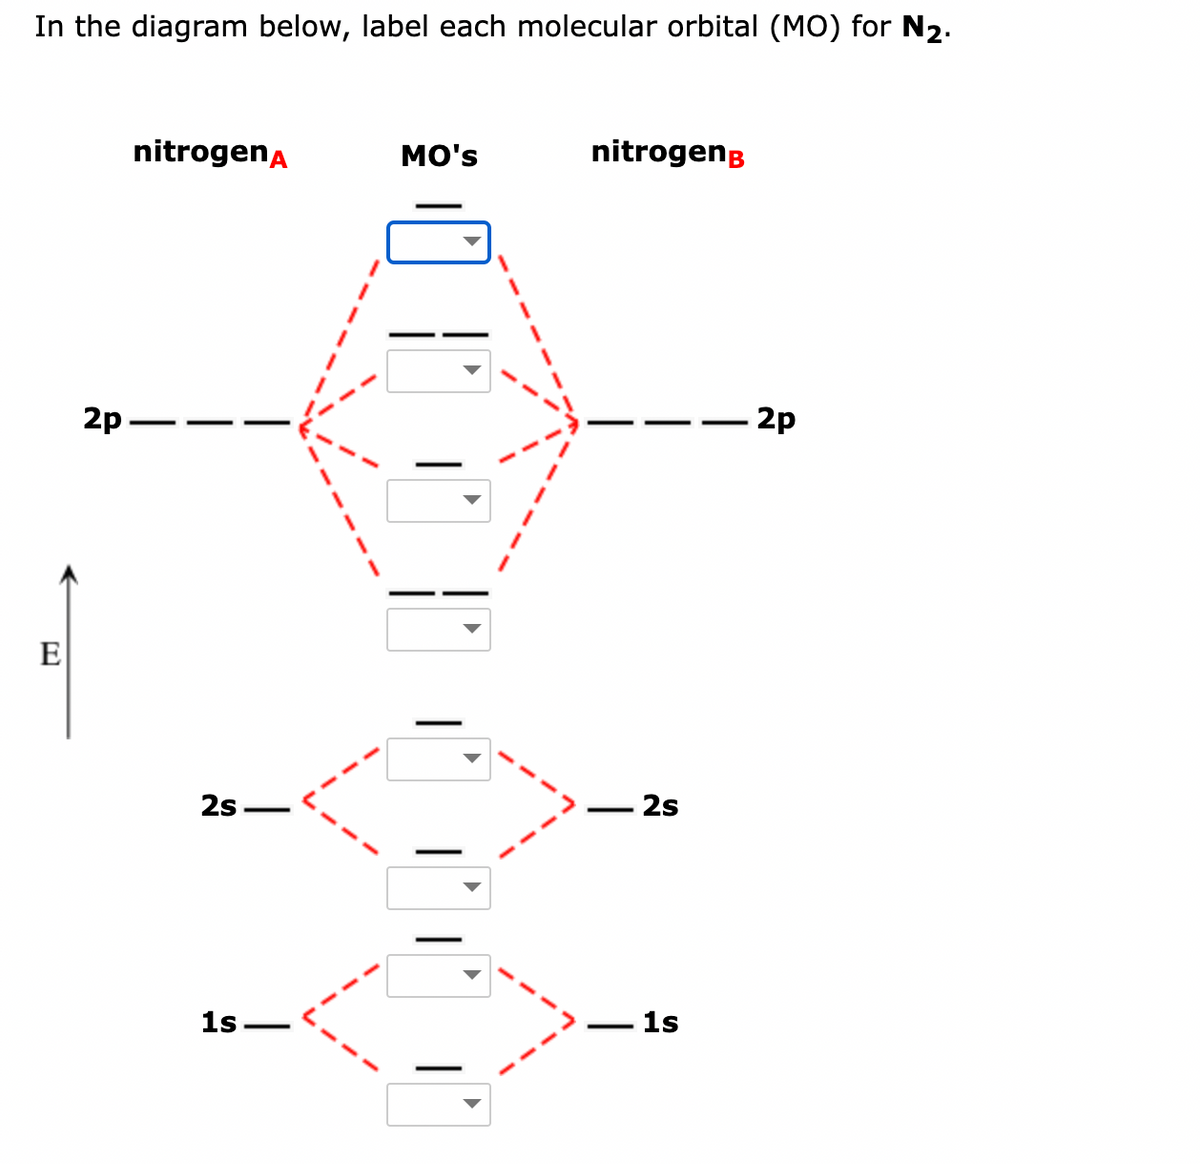 In the diagram below, label each molecular orbital (MO) for N₂.
E
2p
nitrogen
2s
1s-
MO's
nitrogenB
2s
1s
- 2p